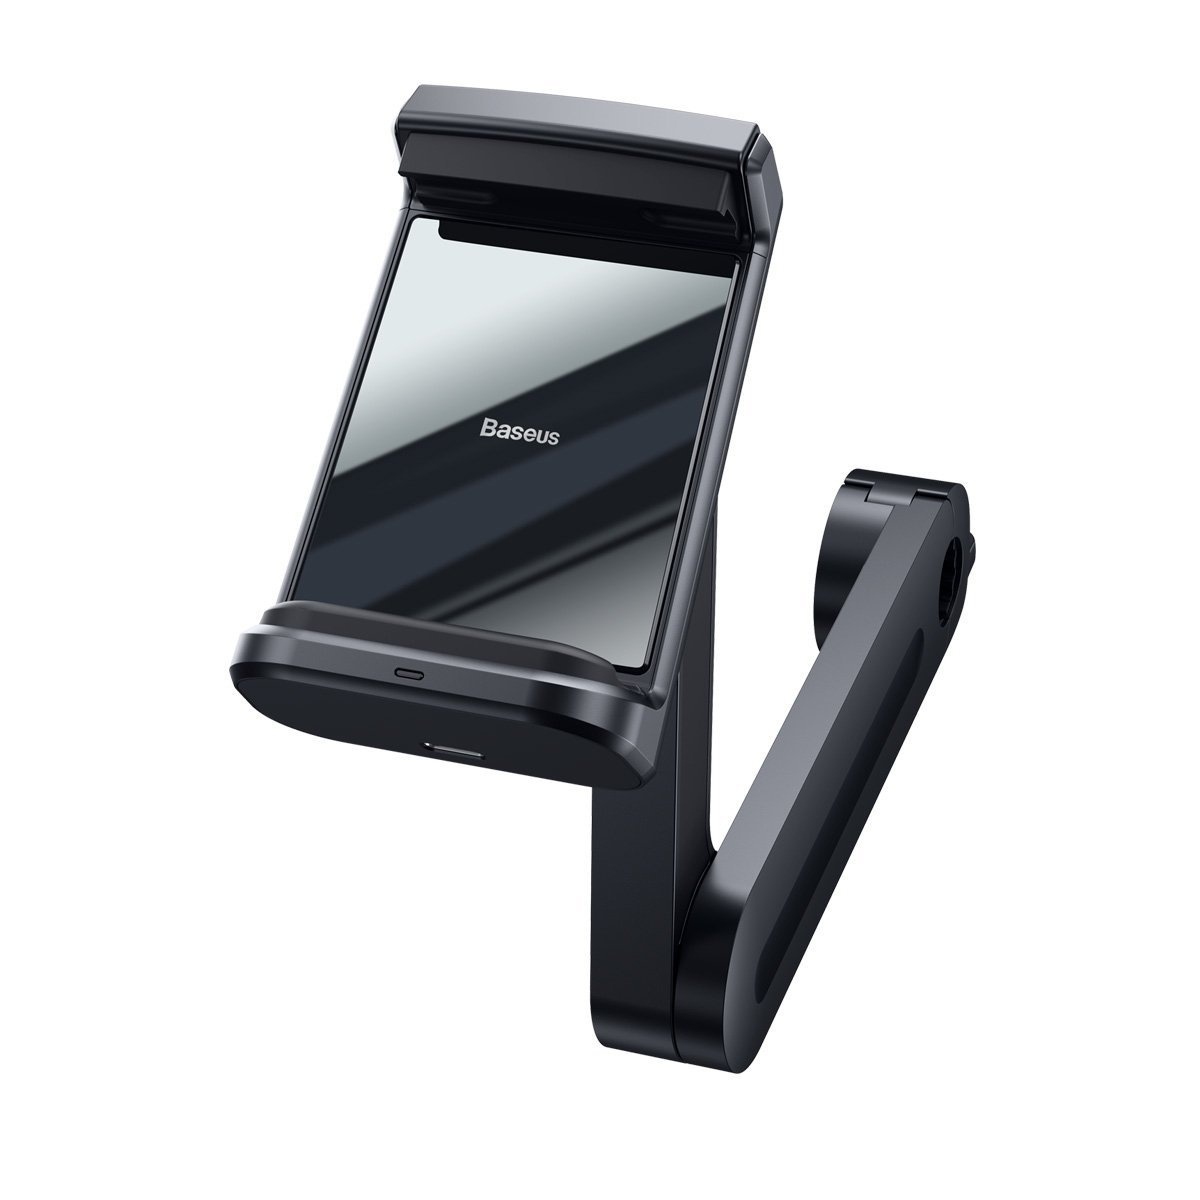 Car headrest holder for Baseus Energy phone with charger (Black)